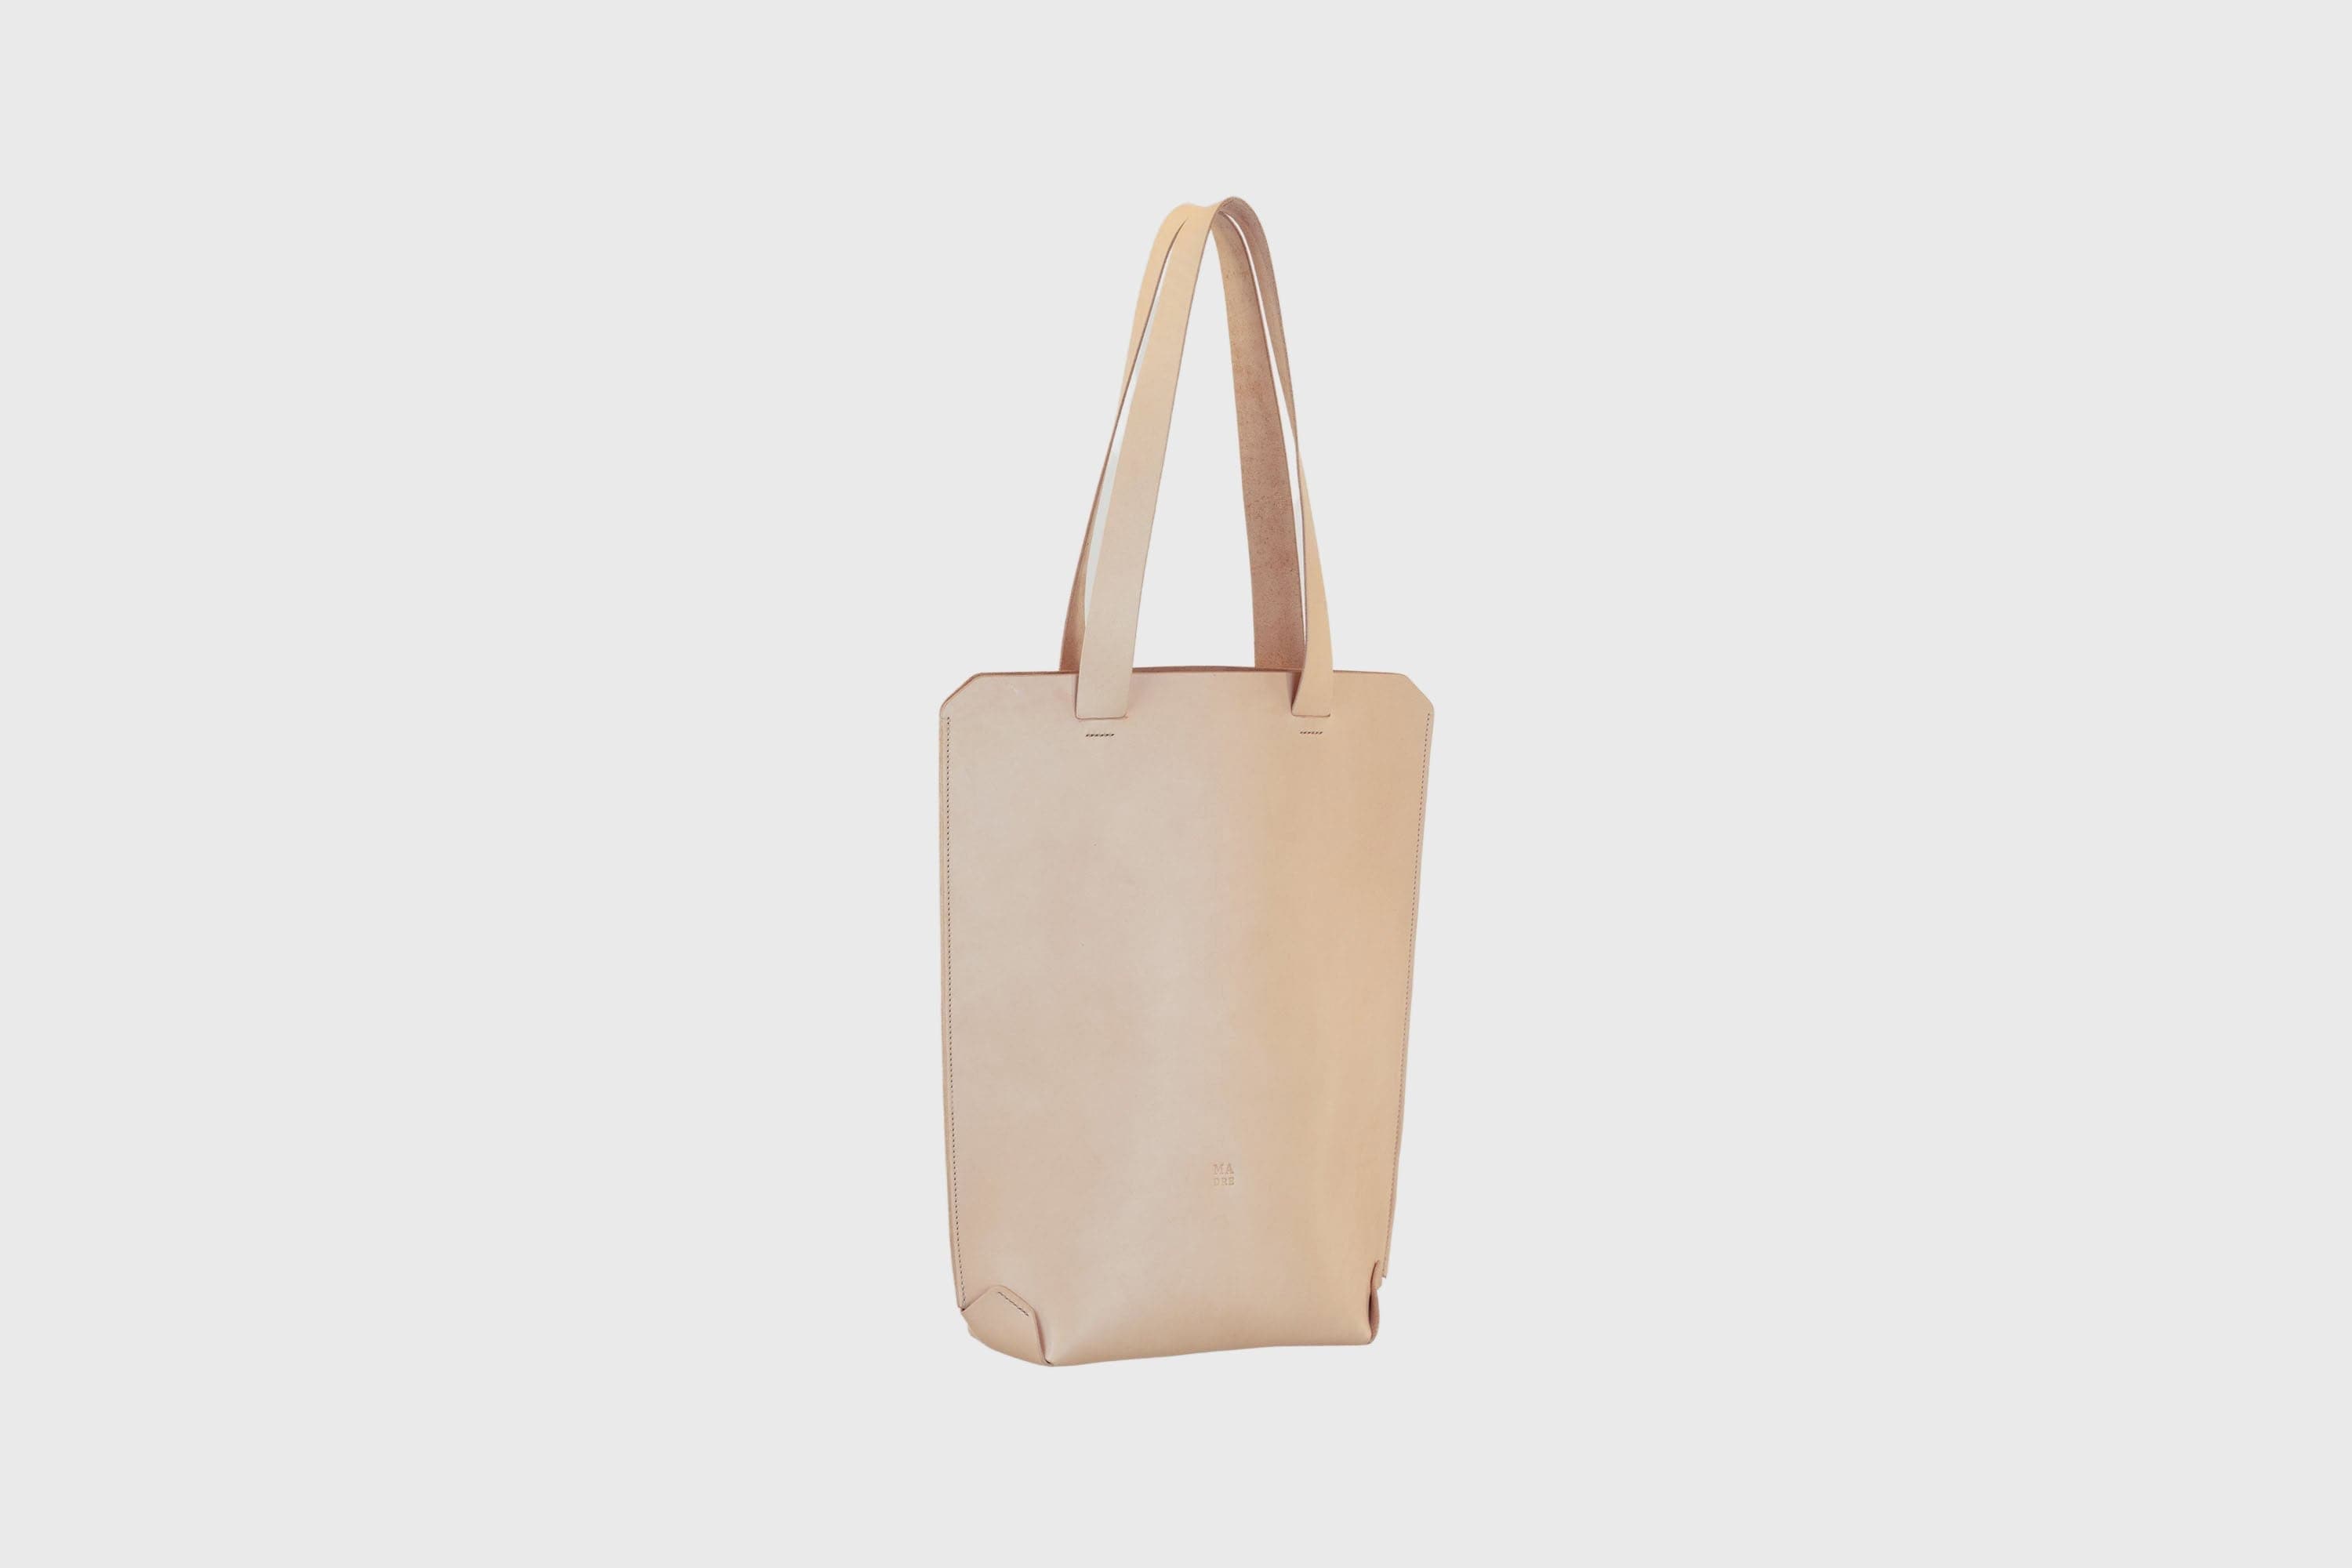 Tote Long Bag Leather Vachetta Natural Color Modern Look Design By Manuel Dreesmann Atelier Madre Barcelona Spain